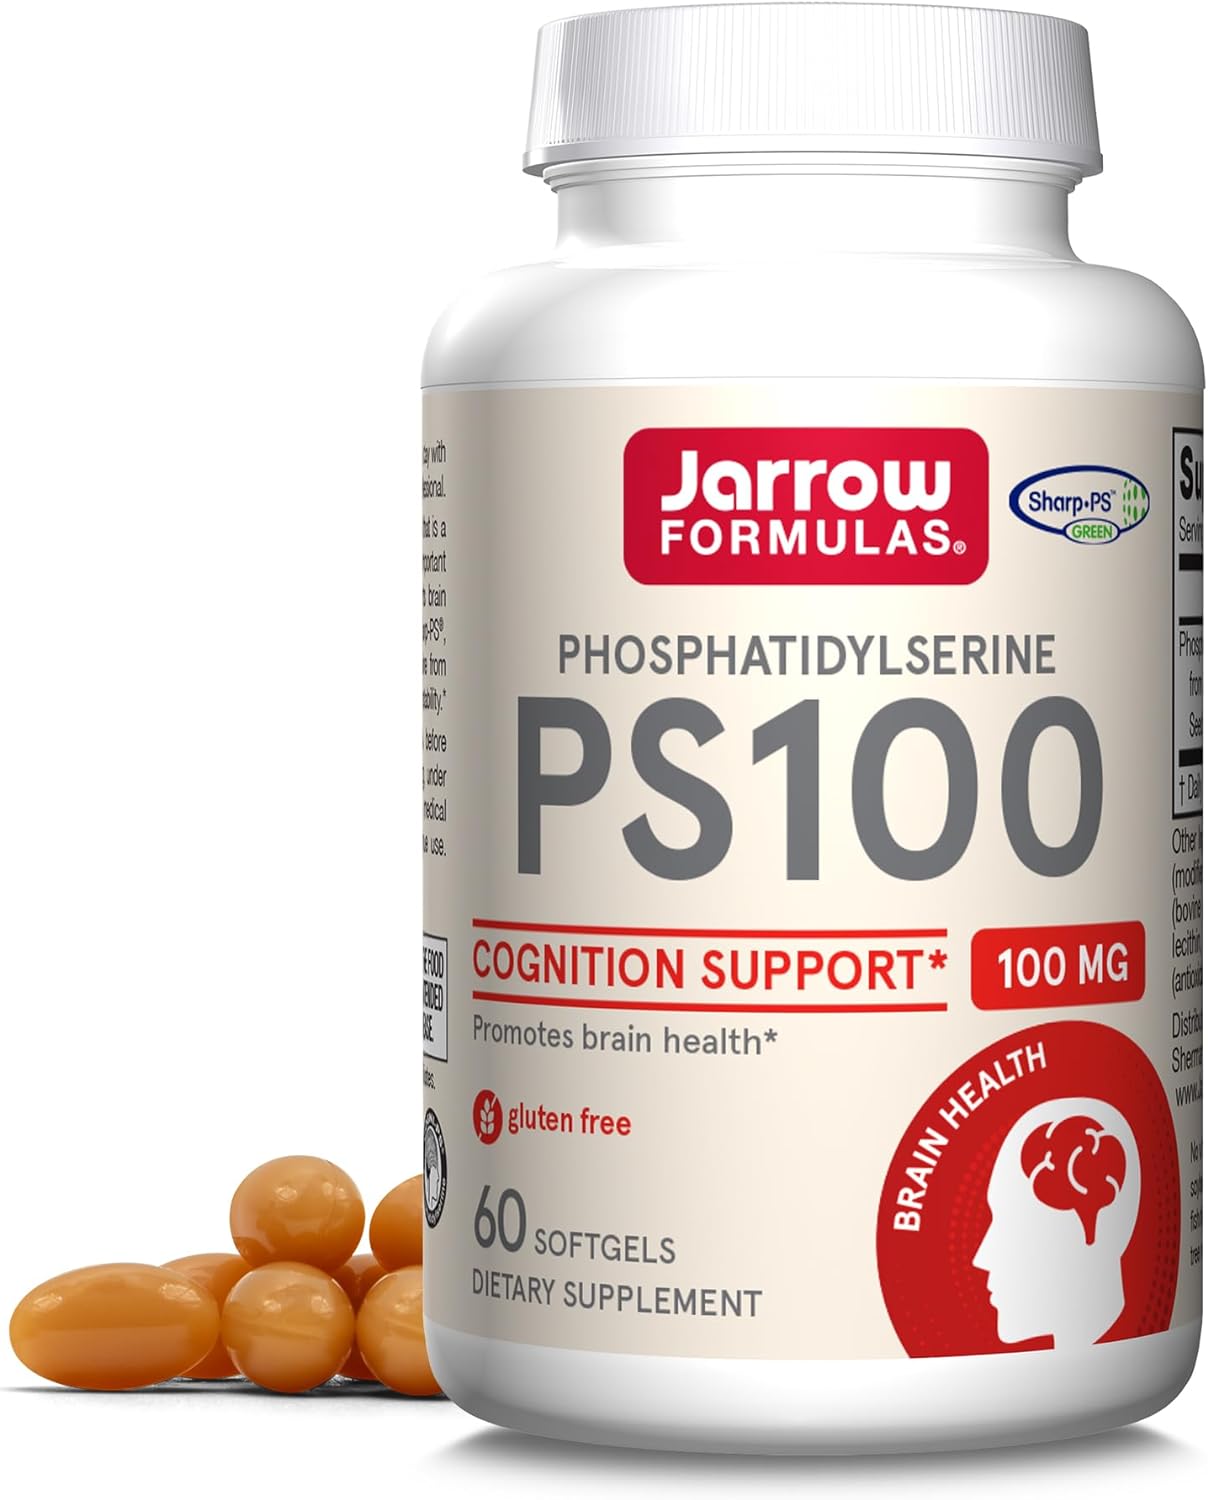 Jarrow Formulas PS 100-60 Softgels - 100 mg Phosphatidy